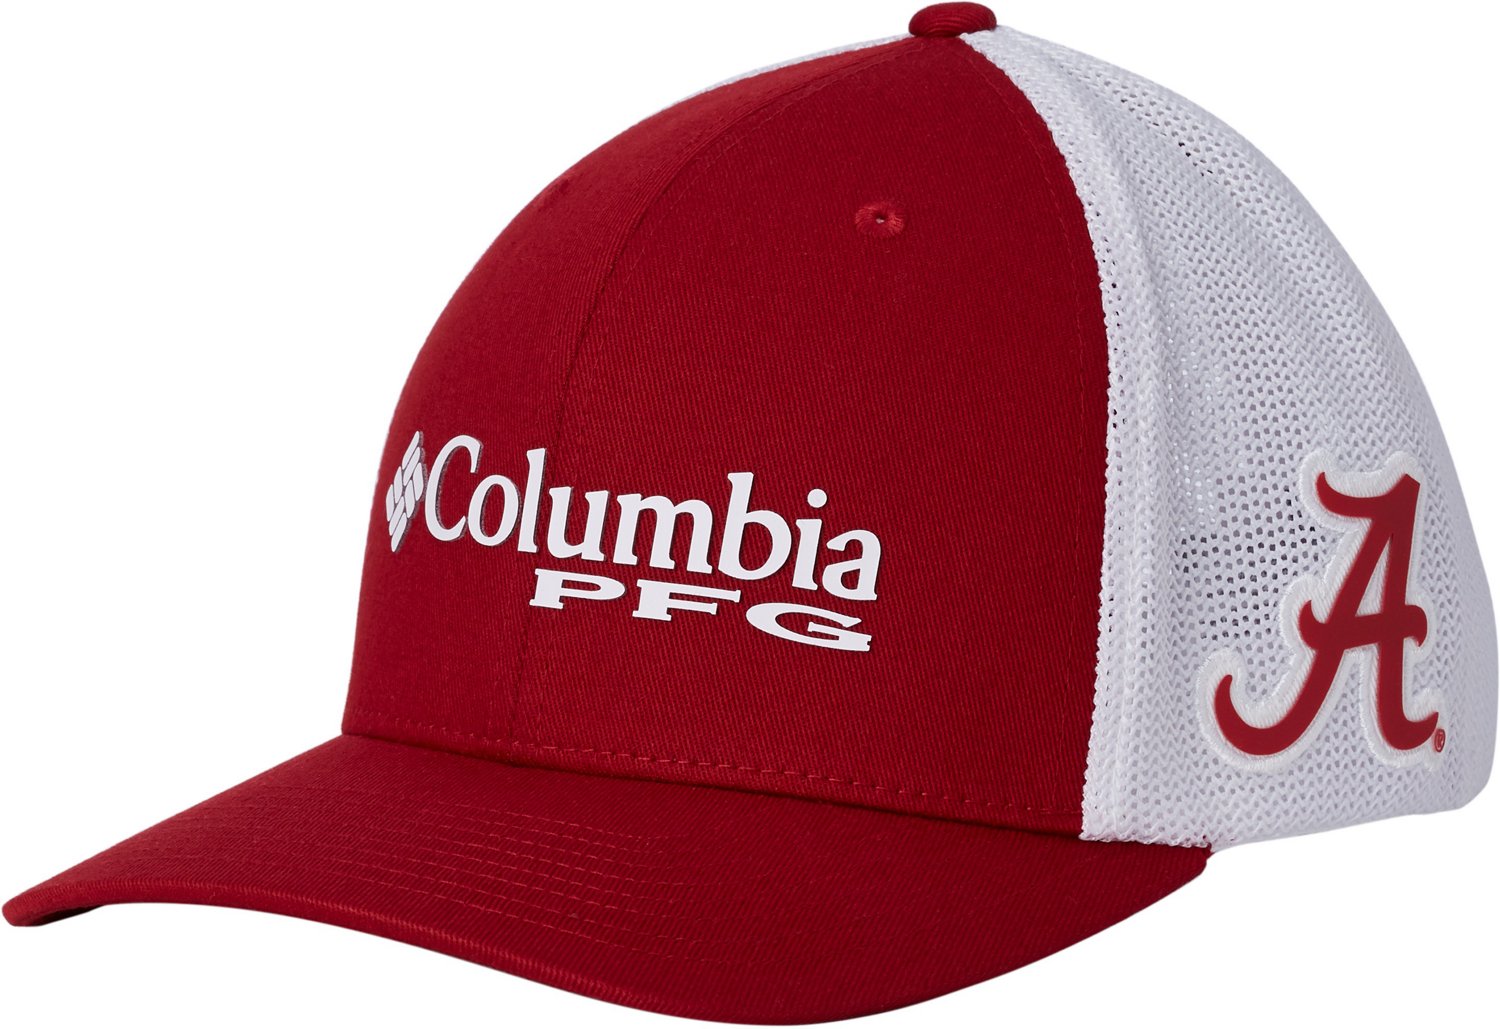 Columbia PFG Mesh Snap Back Ball Cap - University of Arkansas/Red